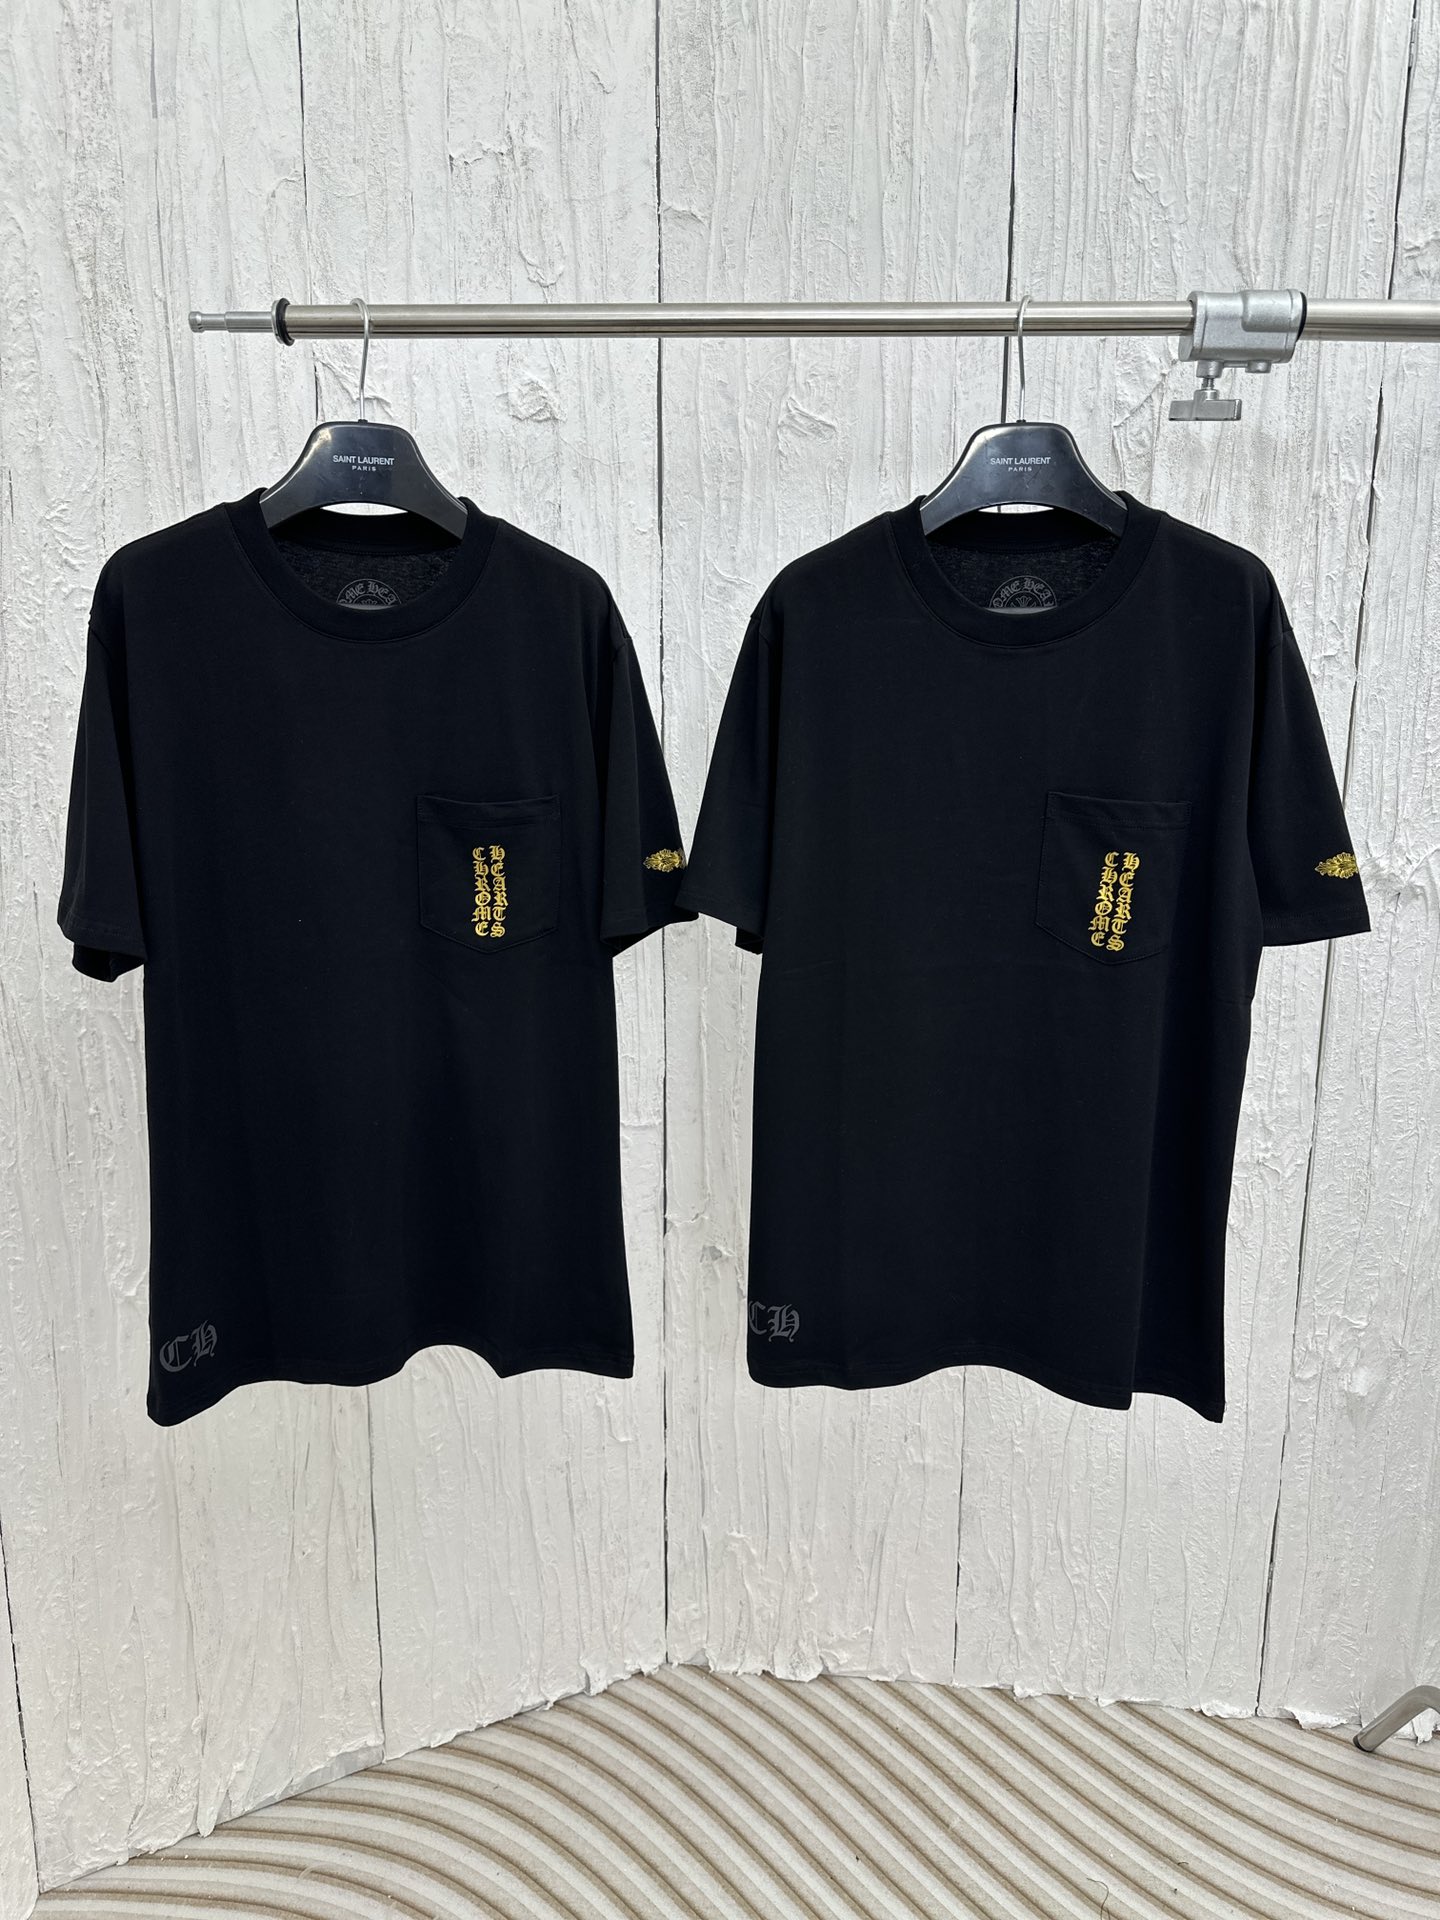 Chrome Hearts Cheap
 Clothing T-Shirt Designer 1:1 Replica
 Black Gold Pink Short Sleeve